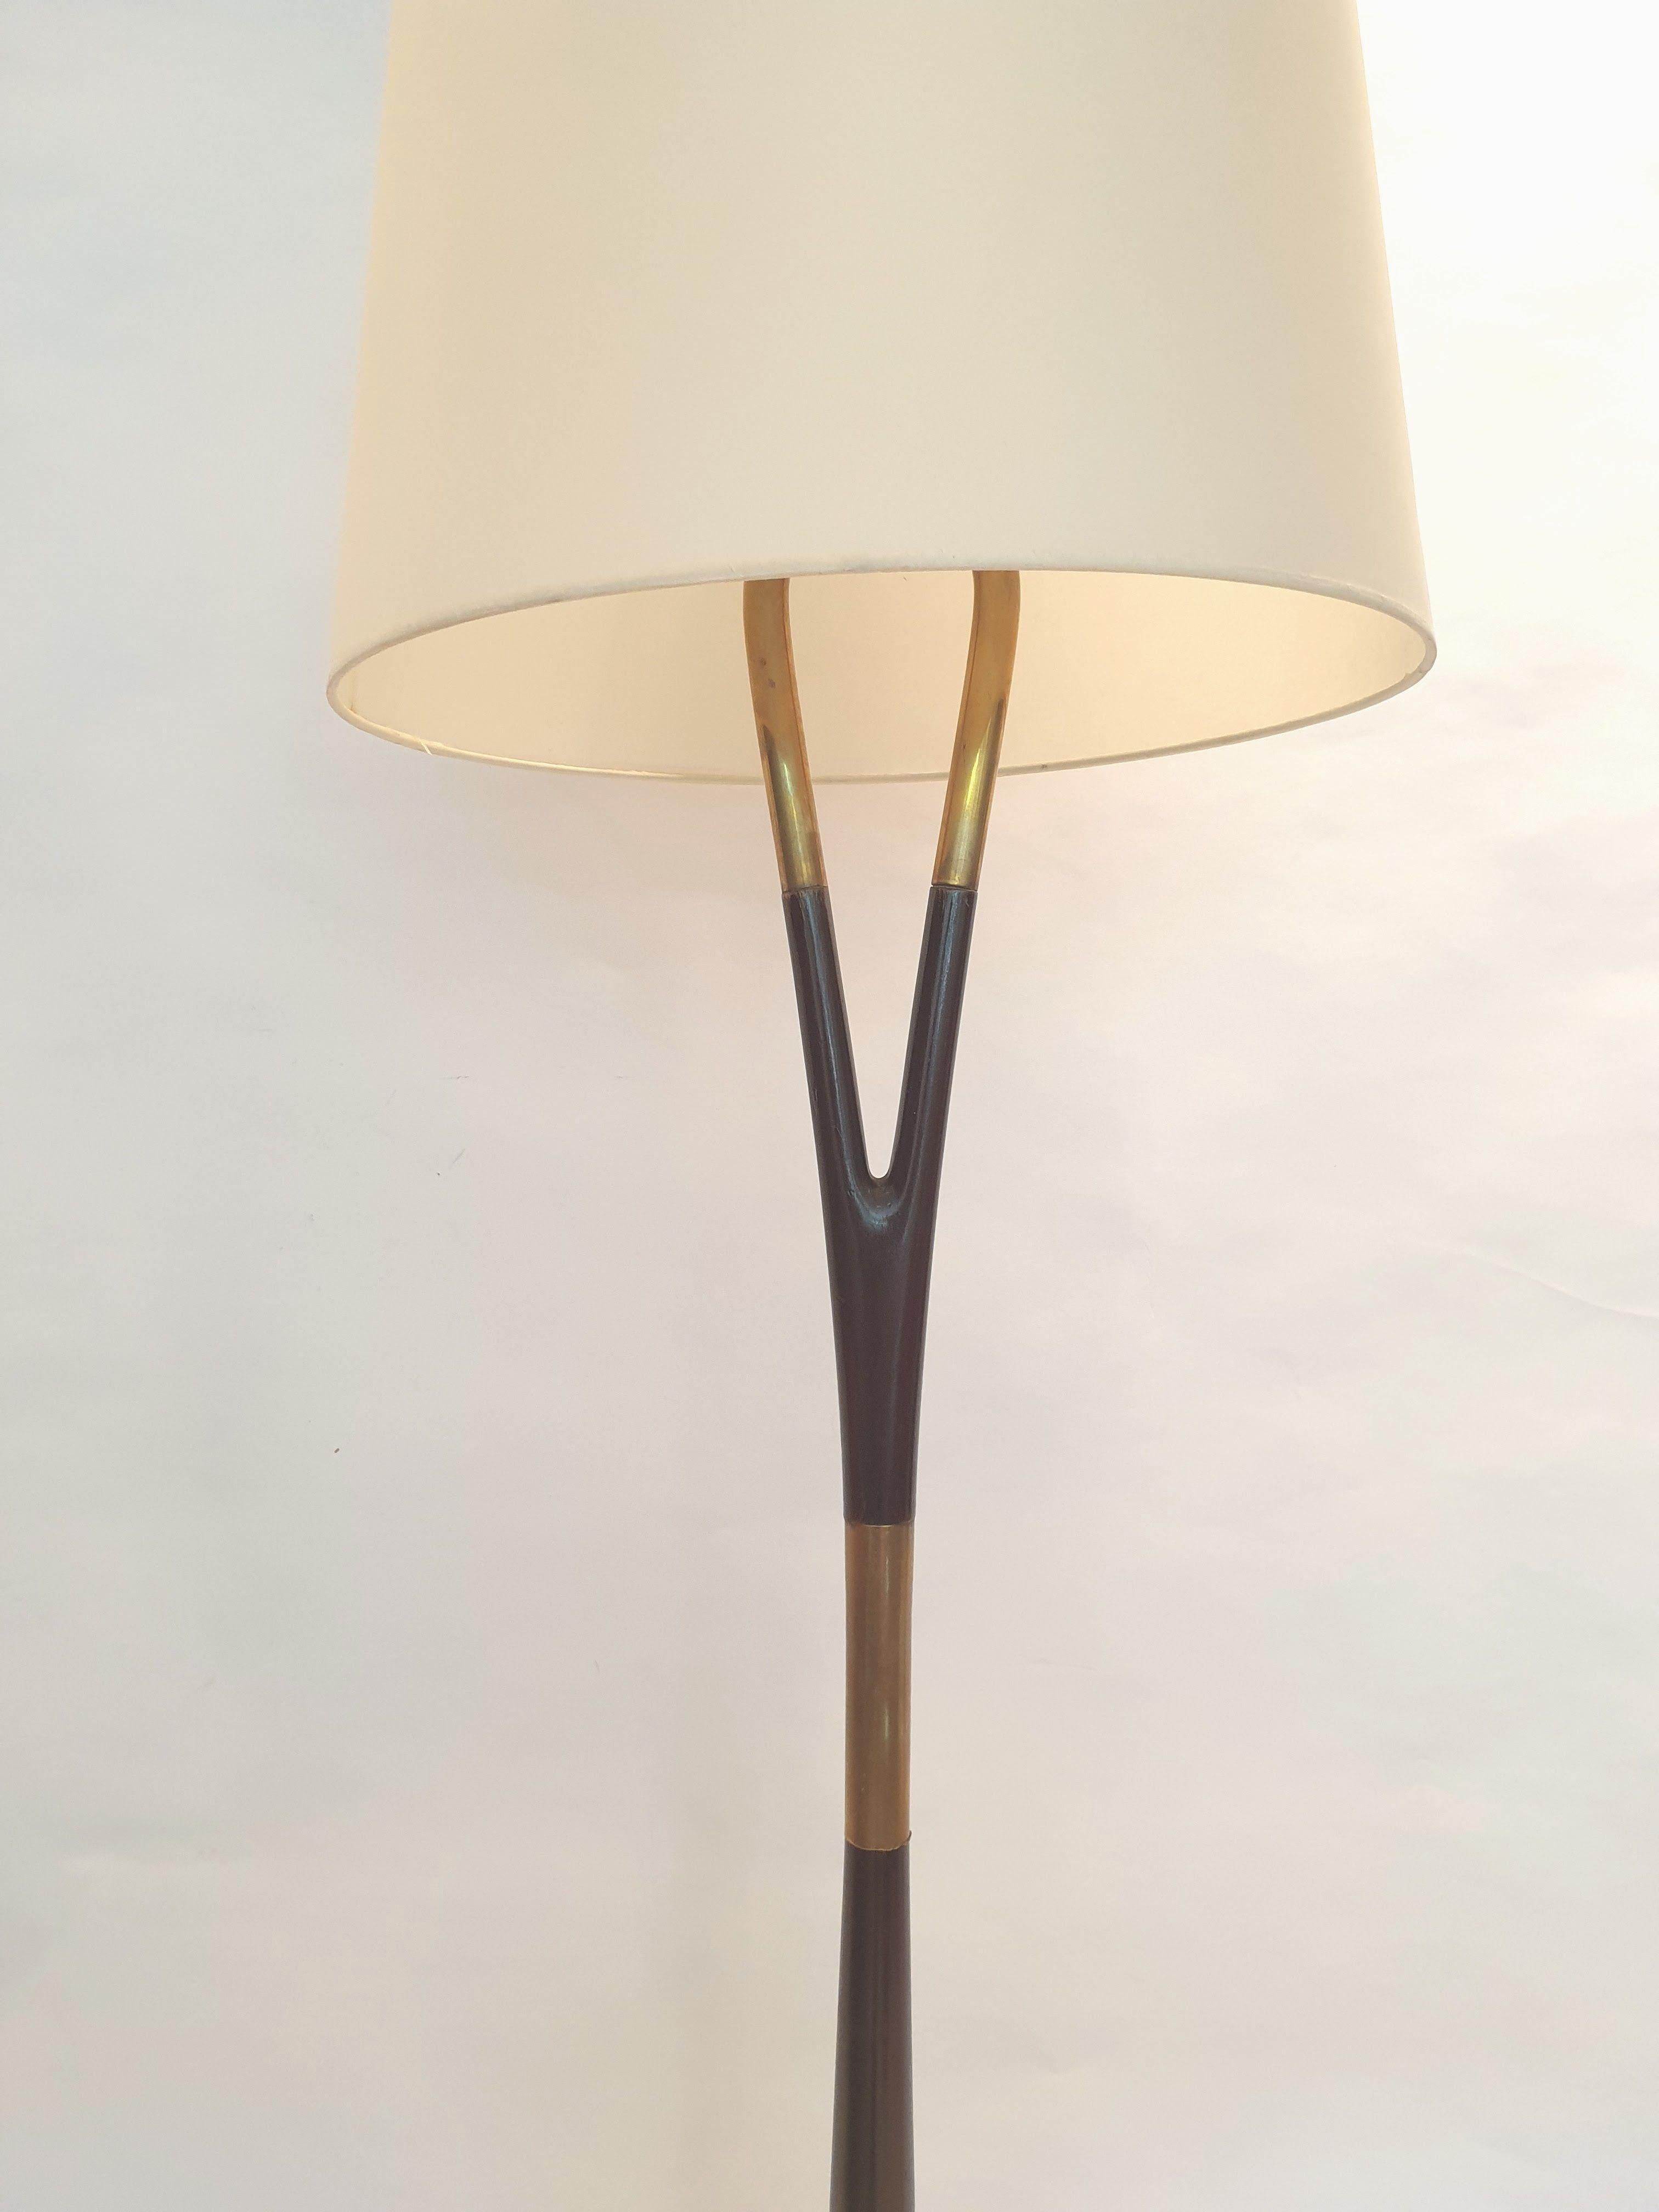 Italian Mid-Century Modern Floor Lamp by Stilnovo